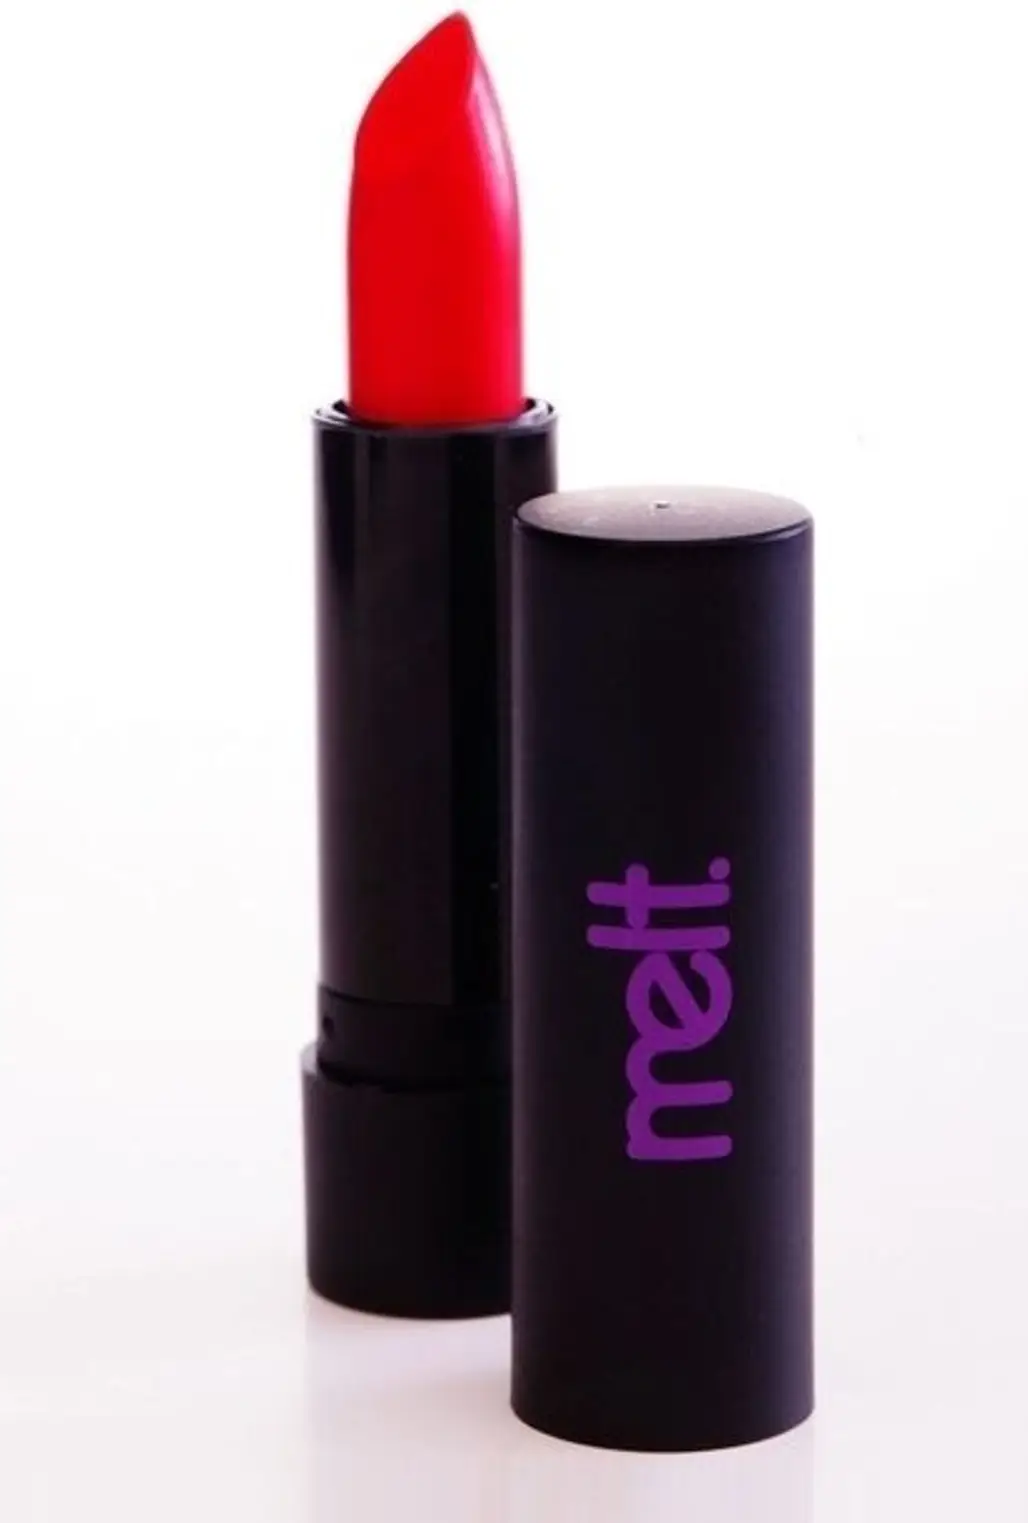 Melt Cosmetics Lipsticks